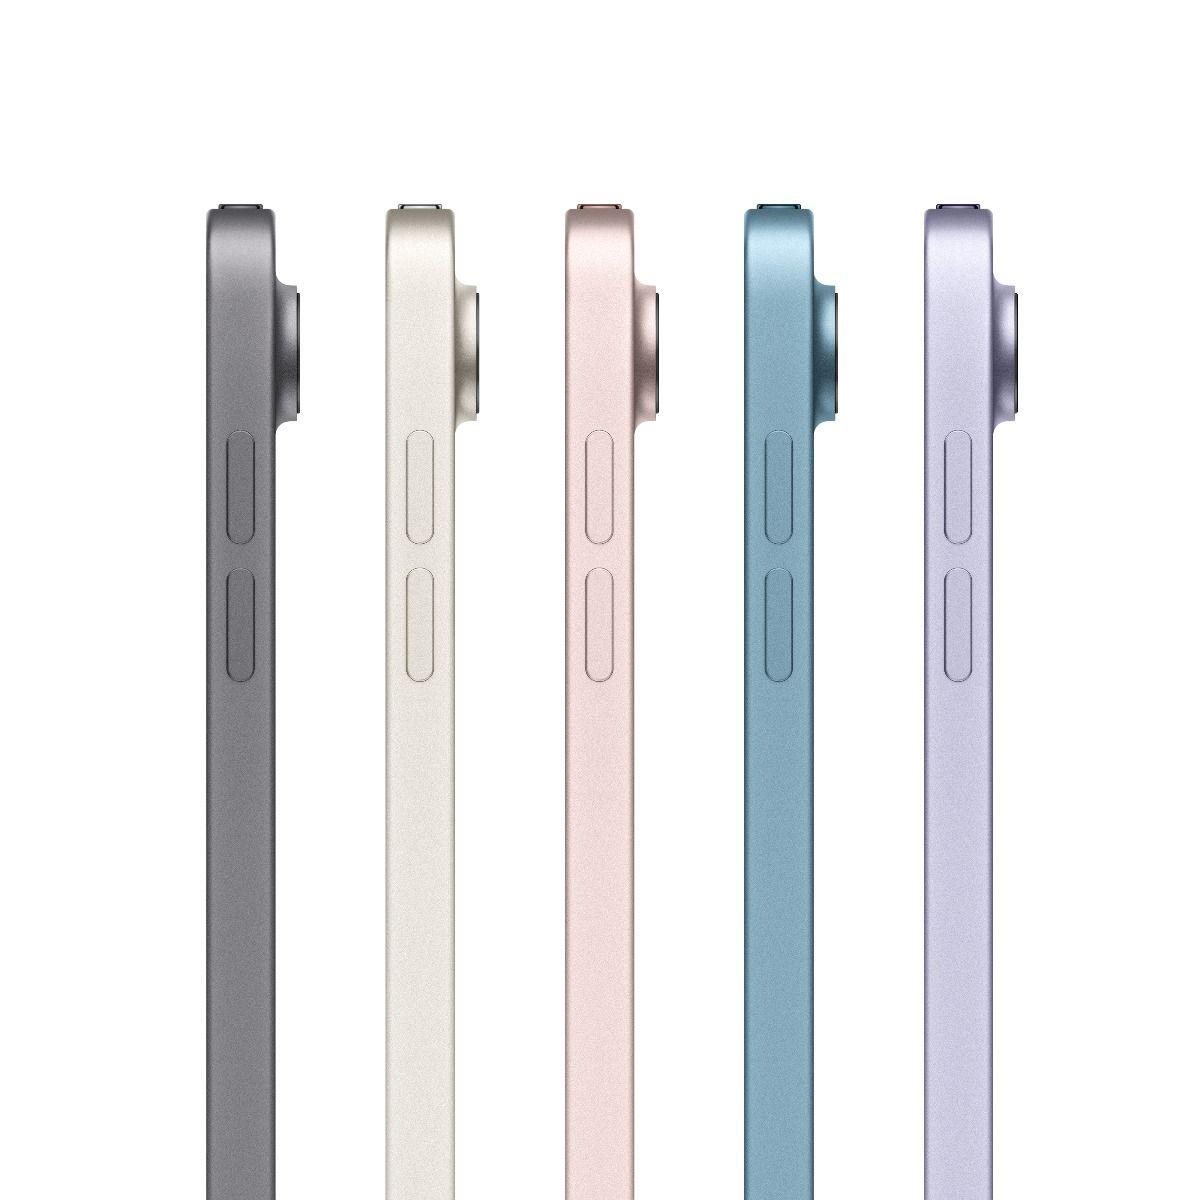 Apple iPad Air 5 10,9'' Wi-Fi 64GB - Space Grey | eD system a.s.